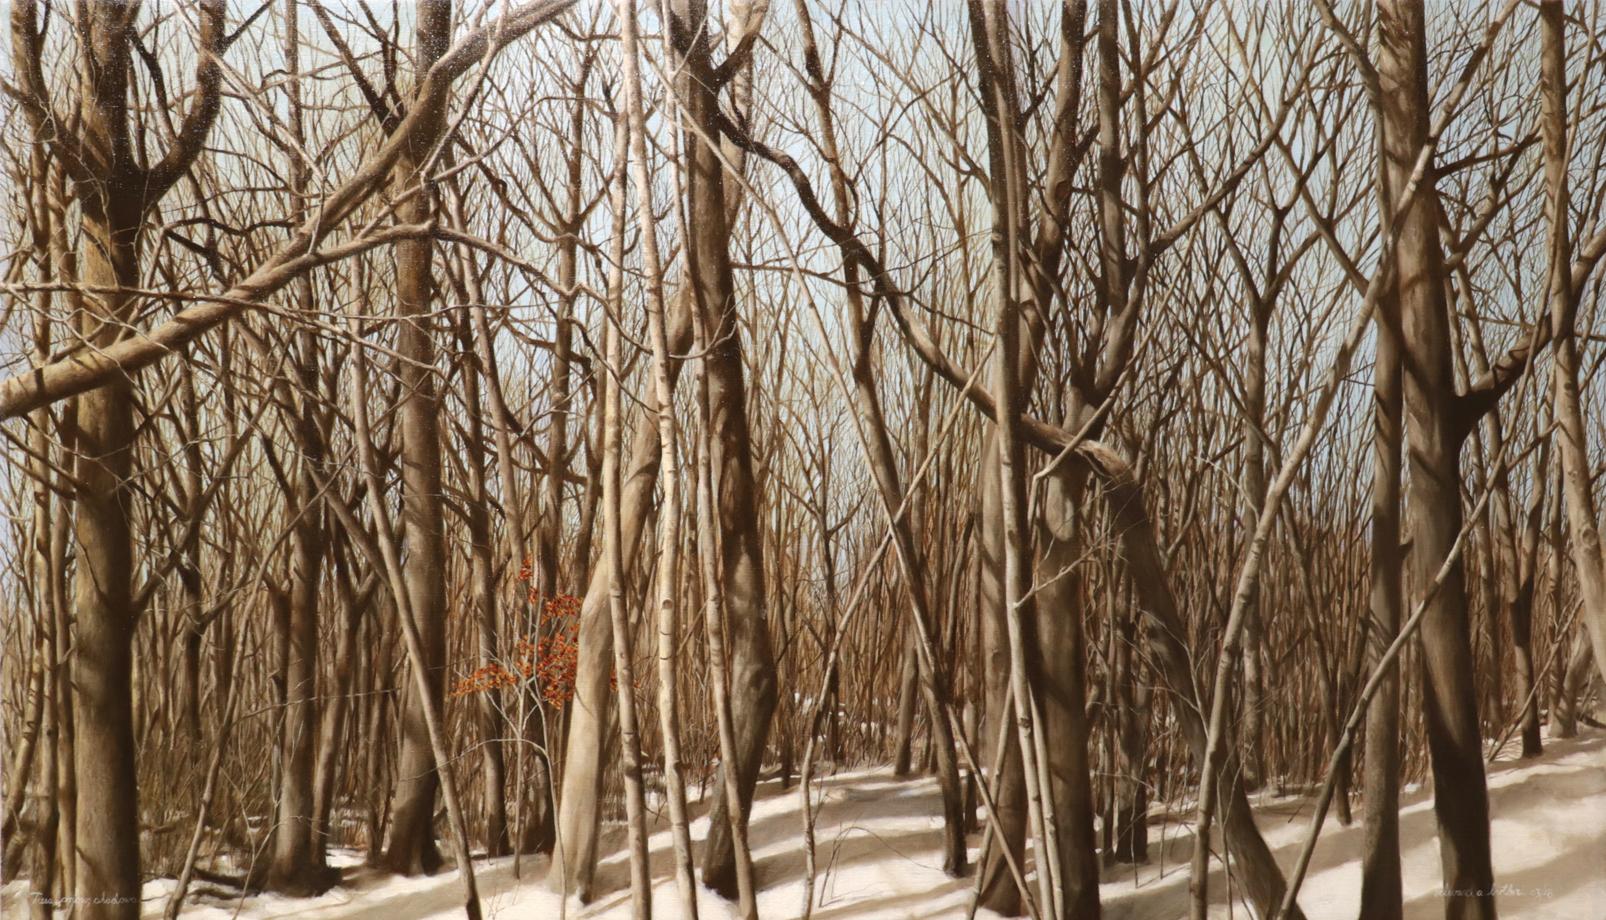 Edward Butler Landscape Painting - TREES, SNOW, SHADOWS - Realism / Winter Landscape / Nature Scene